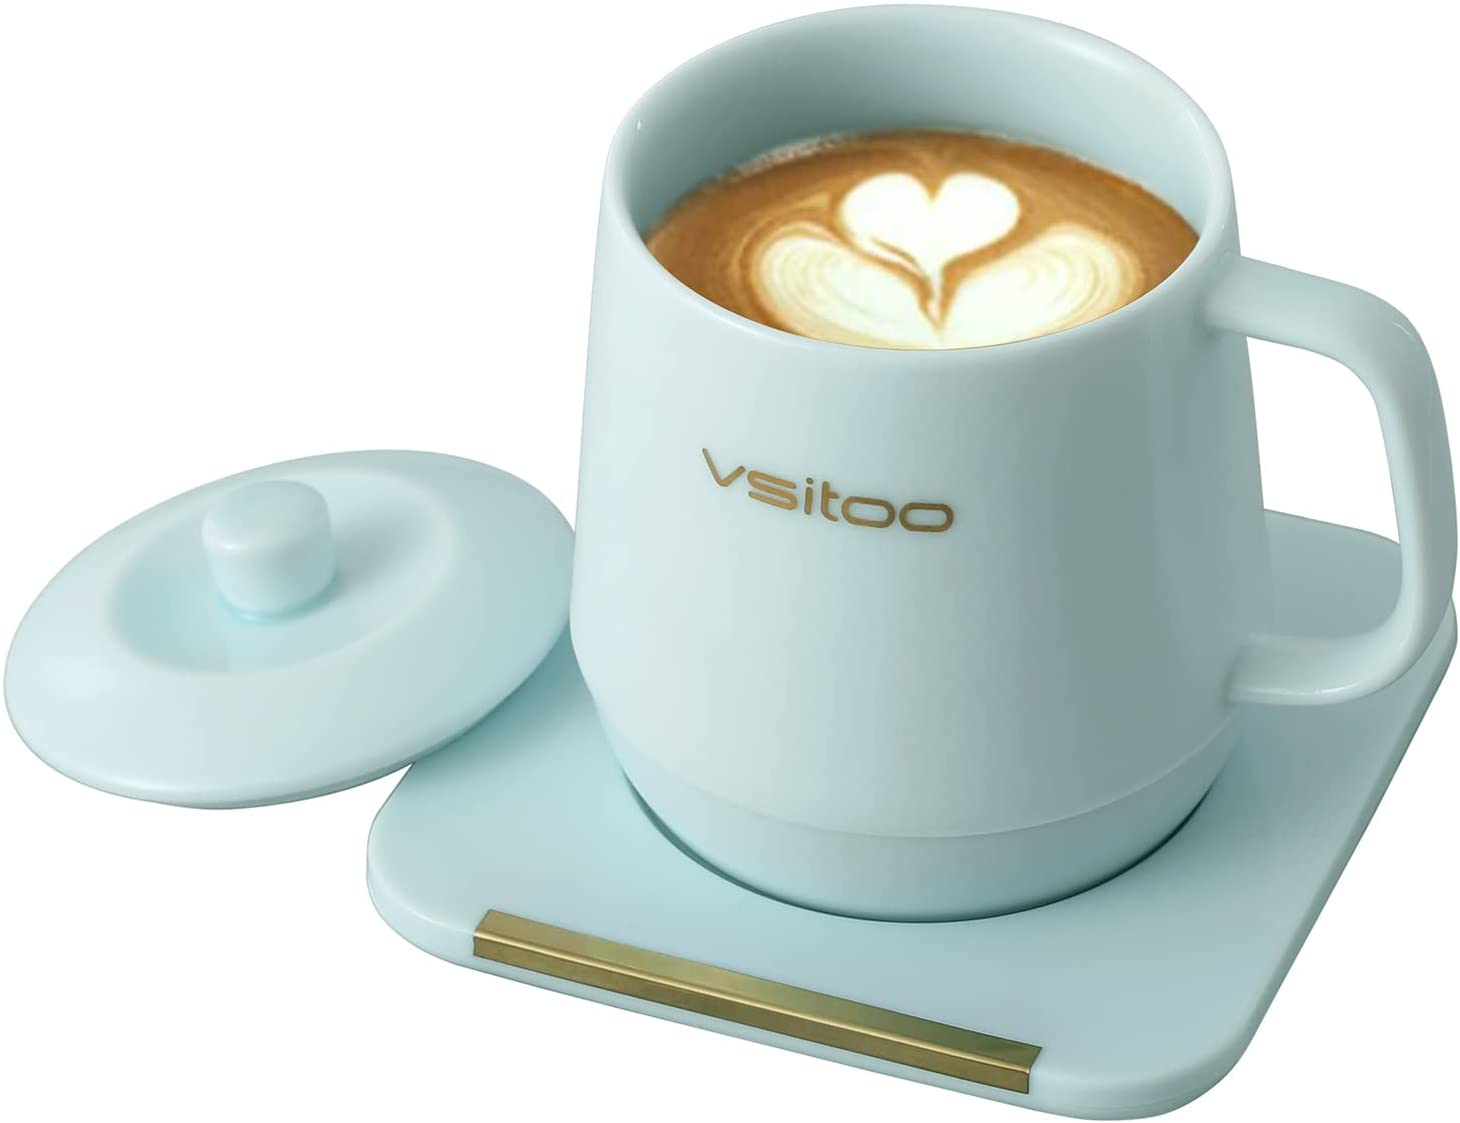 Review of VSITOO Coffee Mug Warmer & Mug Set